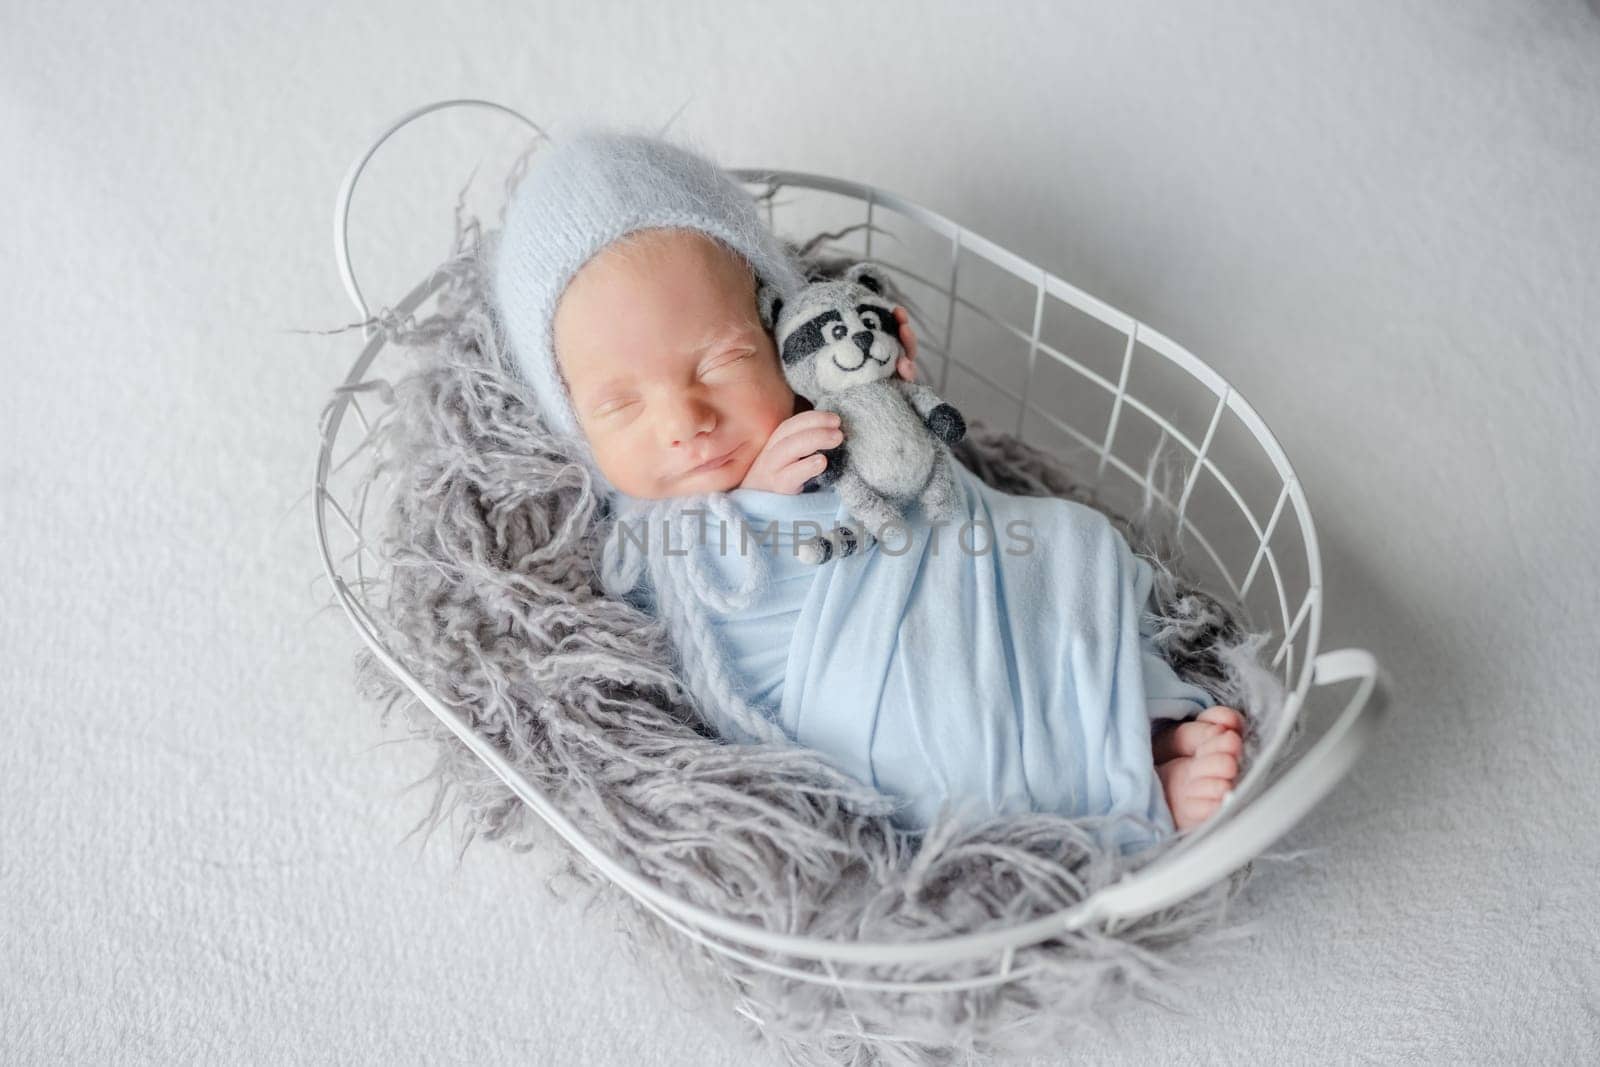 Newborn Baby In Gray Wrap Sleeps In Metal Basket by tan4ikk1